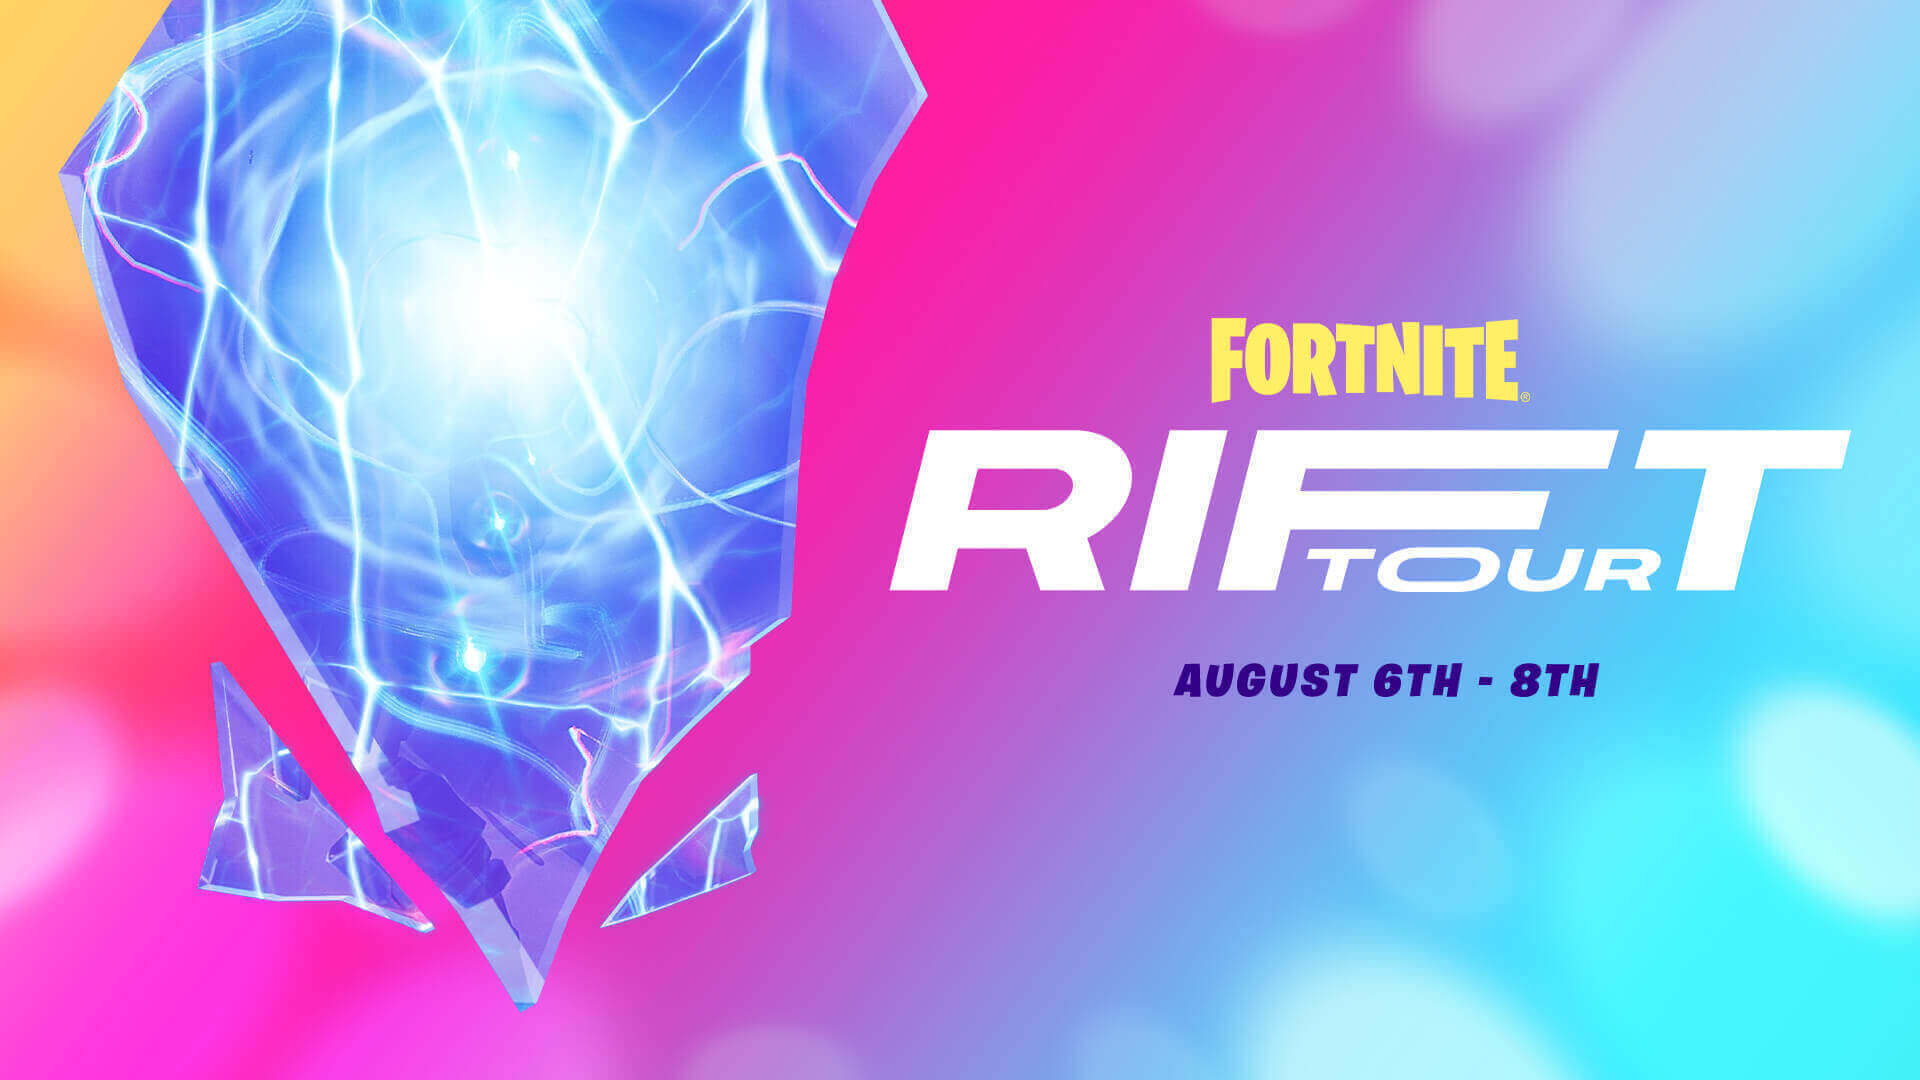 Epic announces Fortnite “Rift Tour” live event Ariana Grande concert